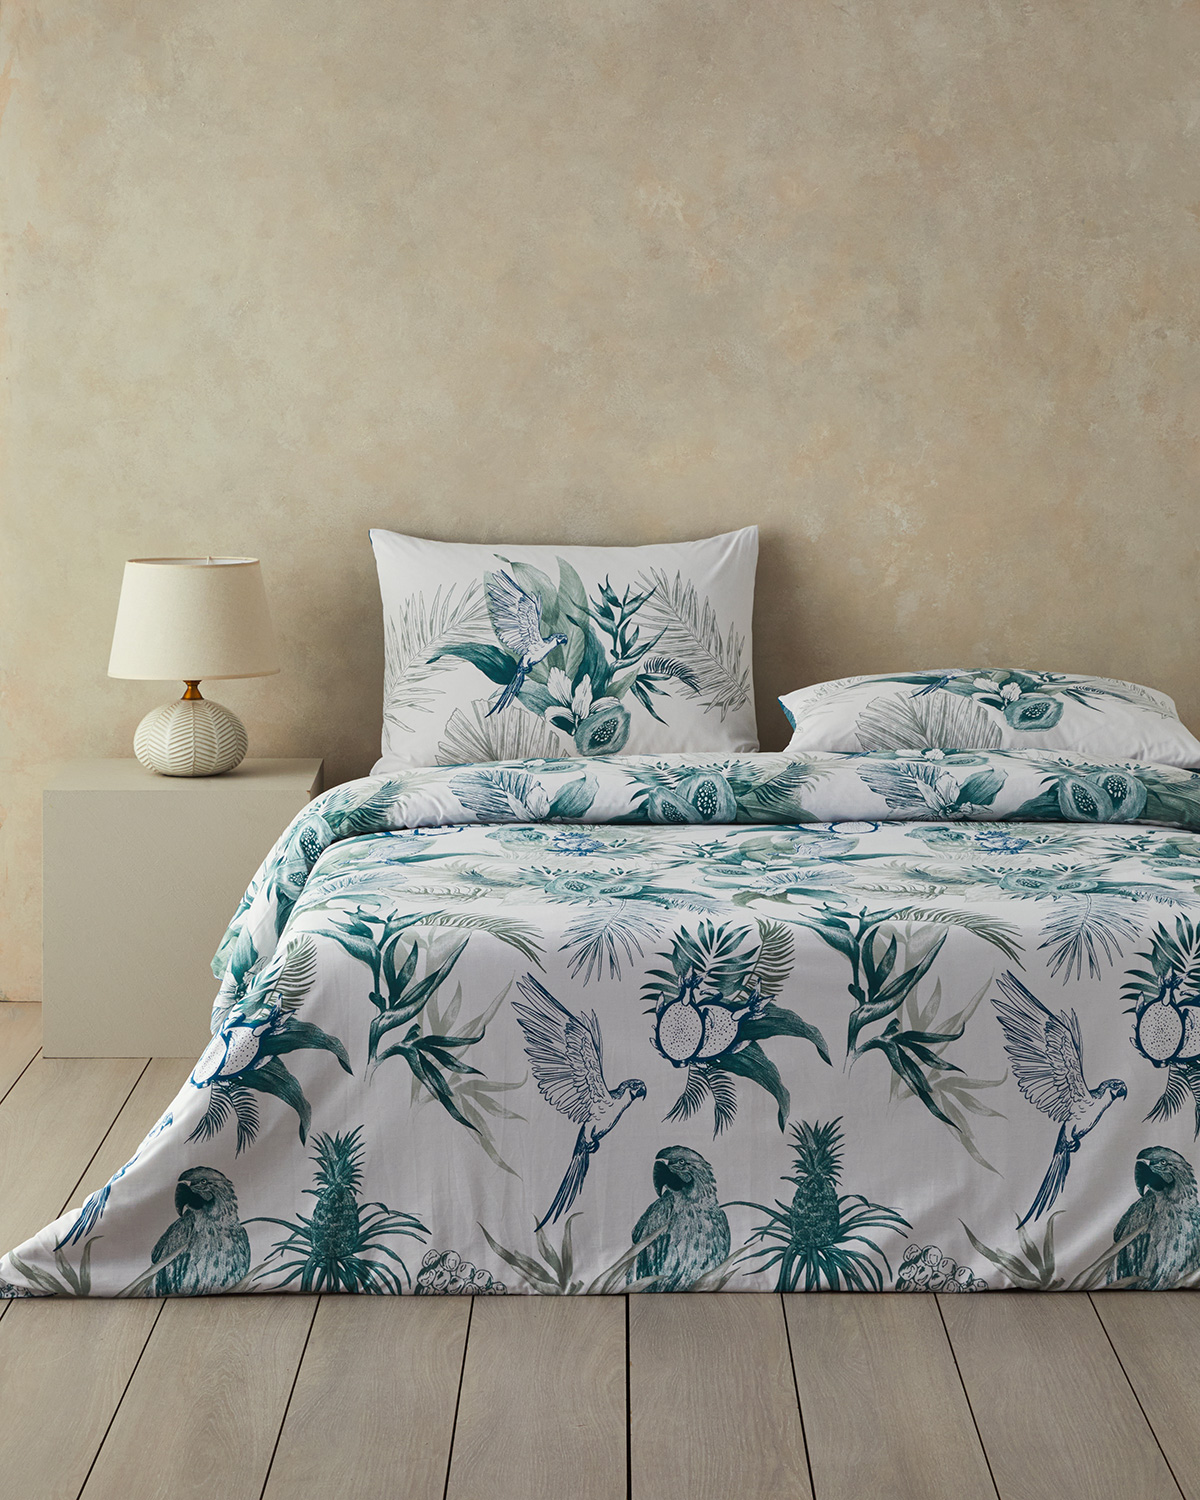 Exotic Toile Cotton Single Size Duvet Cover Set 160x220 Cm Navy Blue - Green